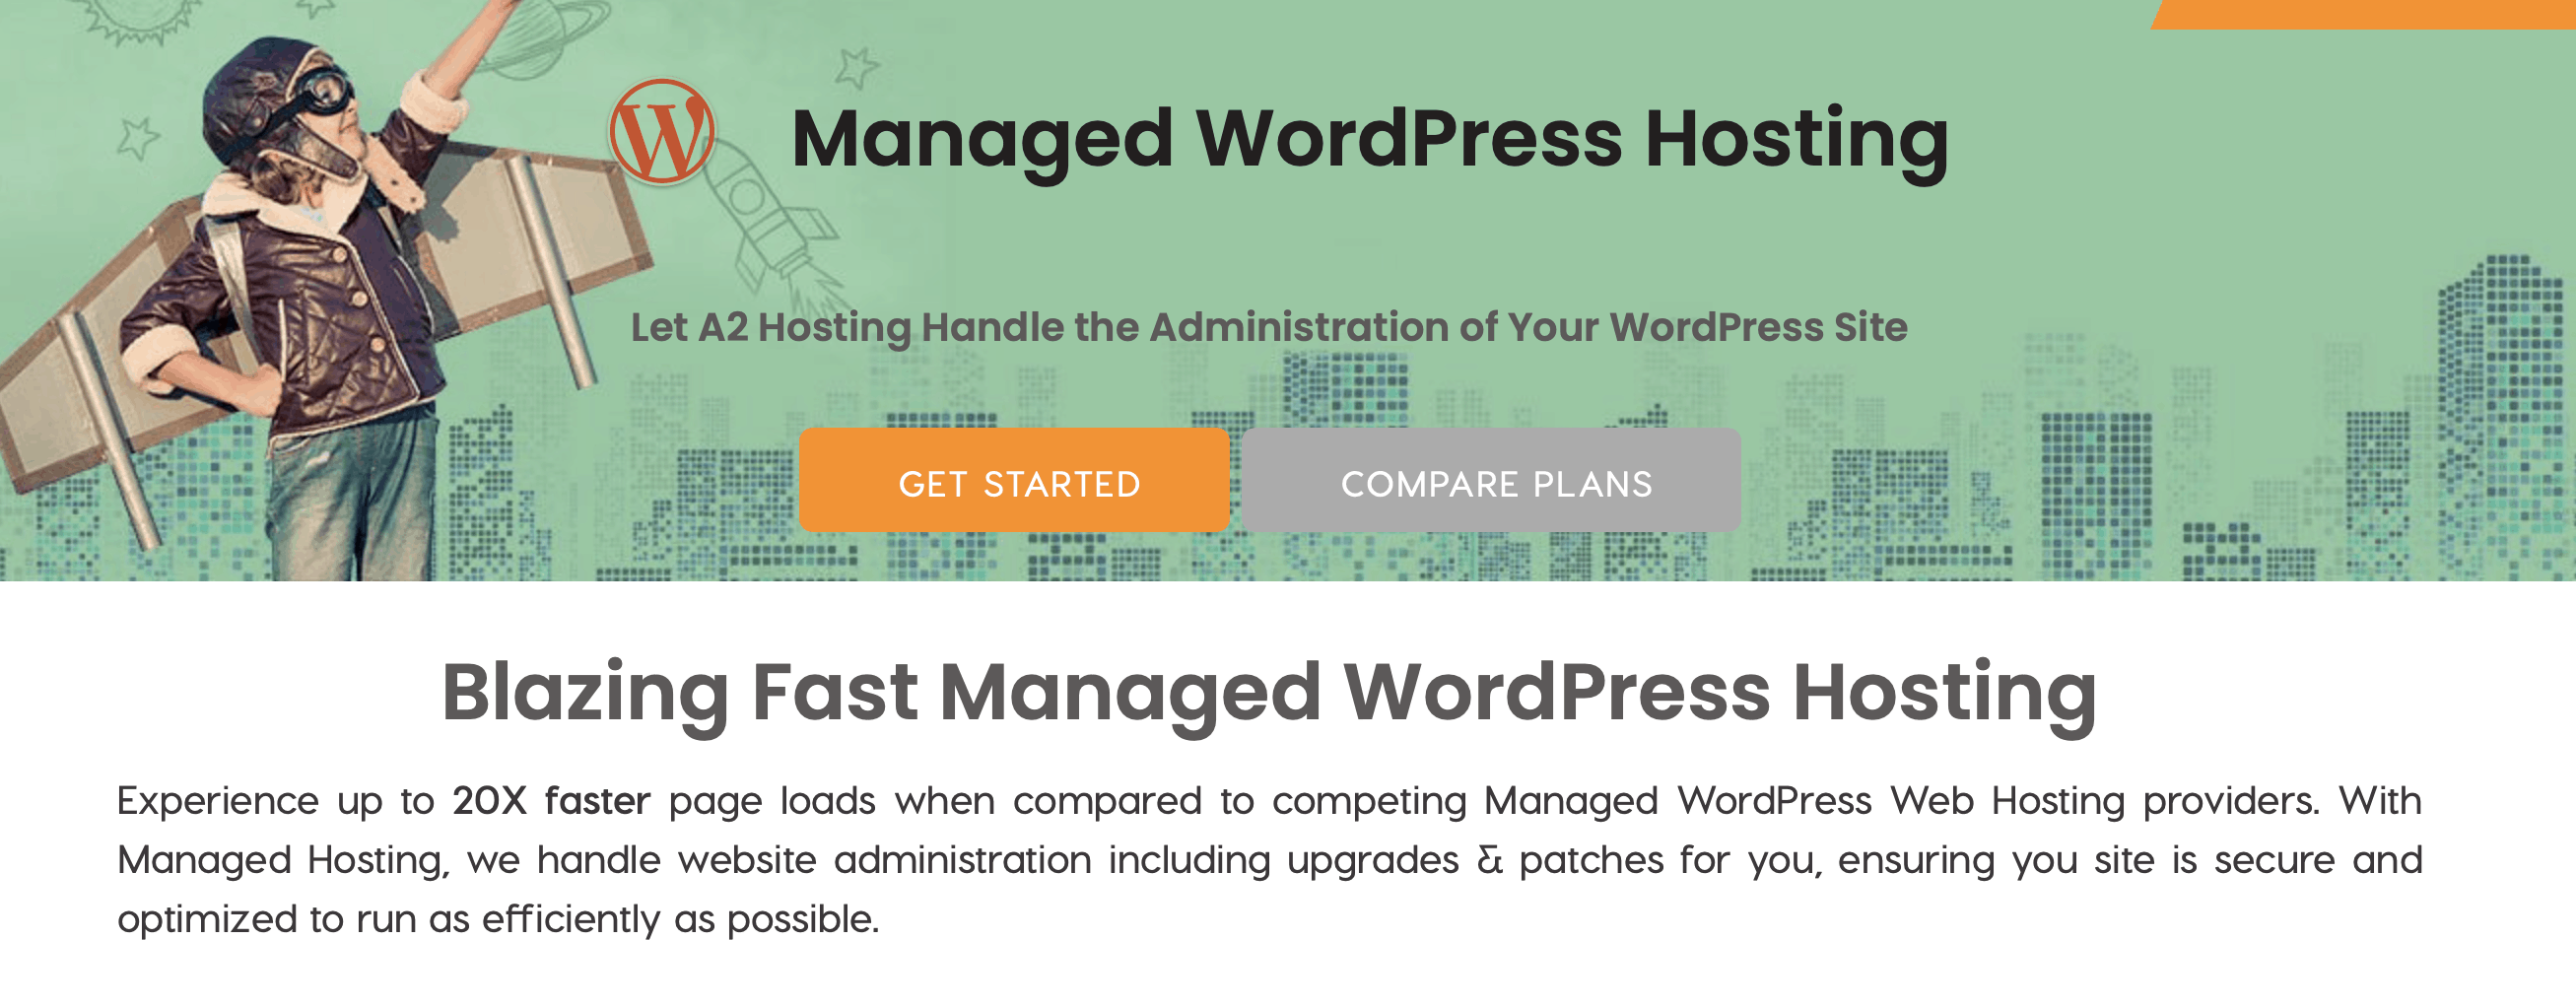 a2 hosting managed wordpress hosting